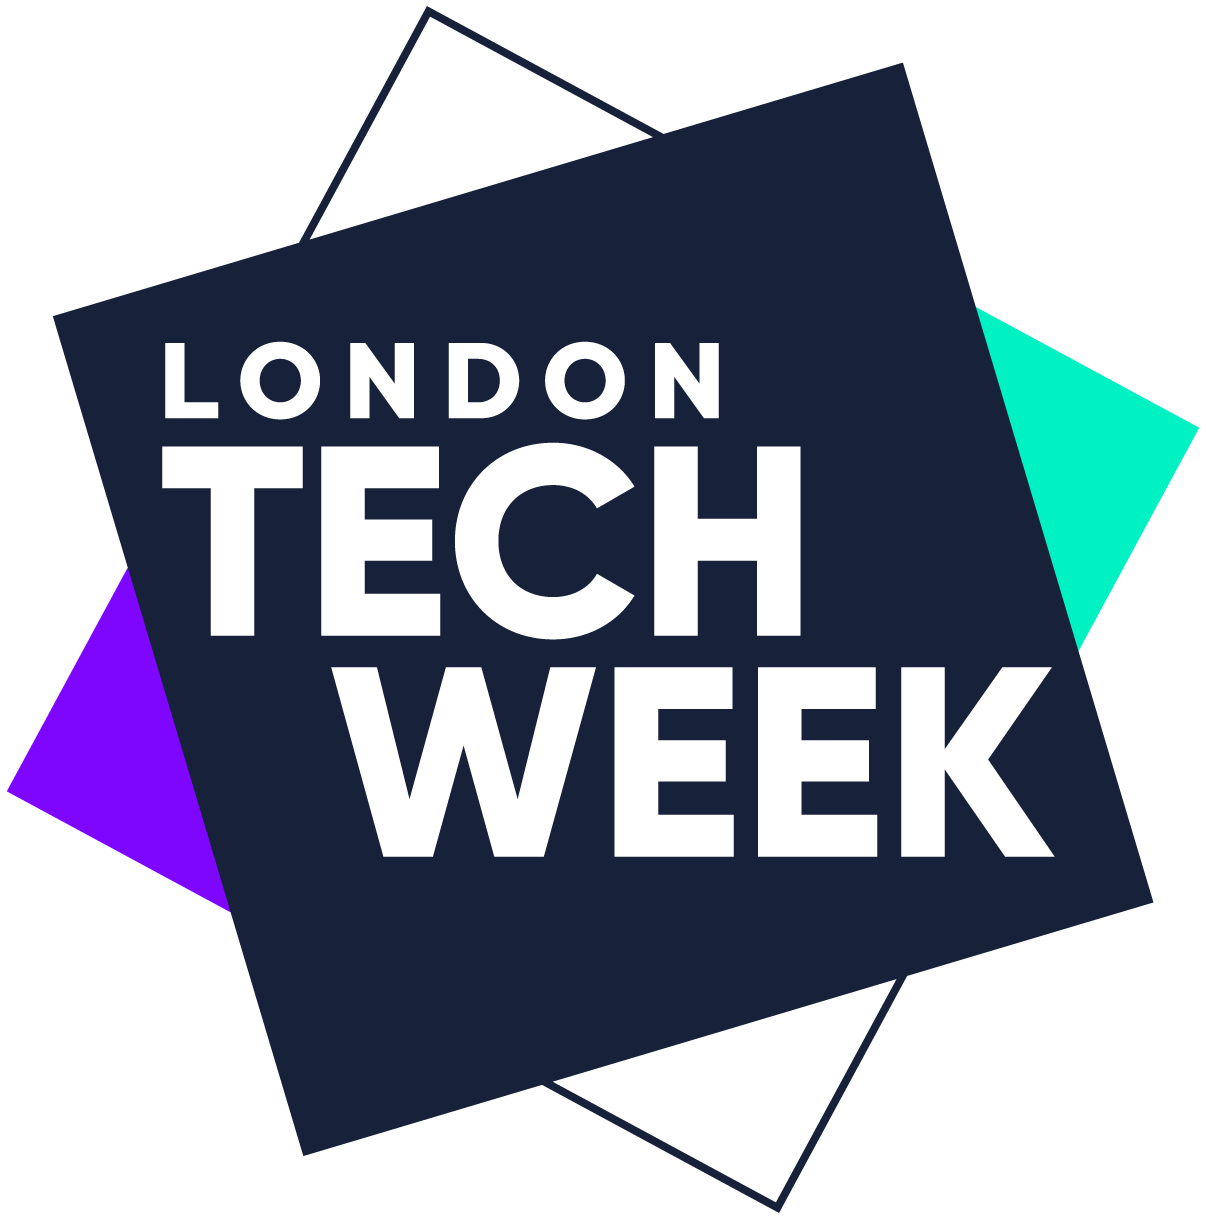 London Tech Week logo